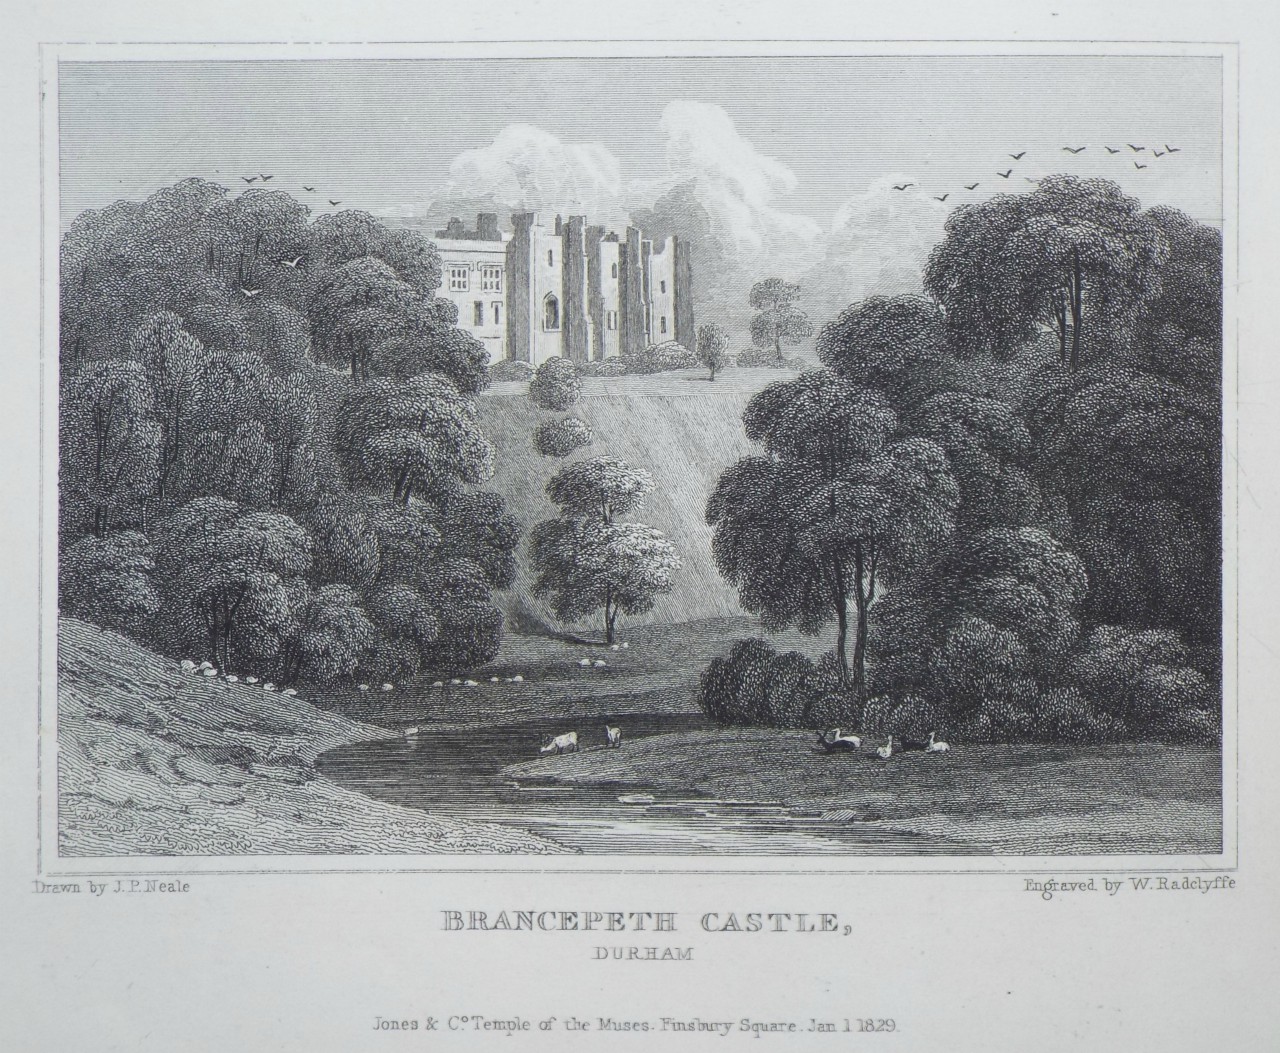 Print - Brancepath Castle, Durham. - Radclyffe